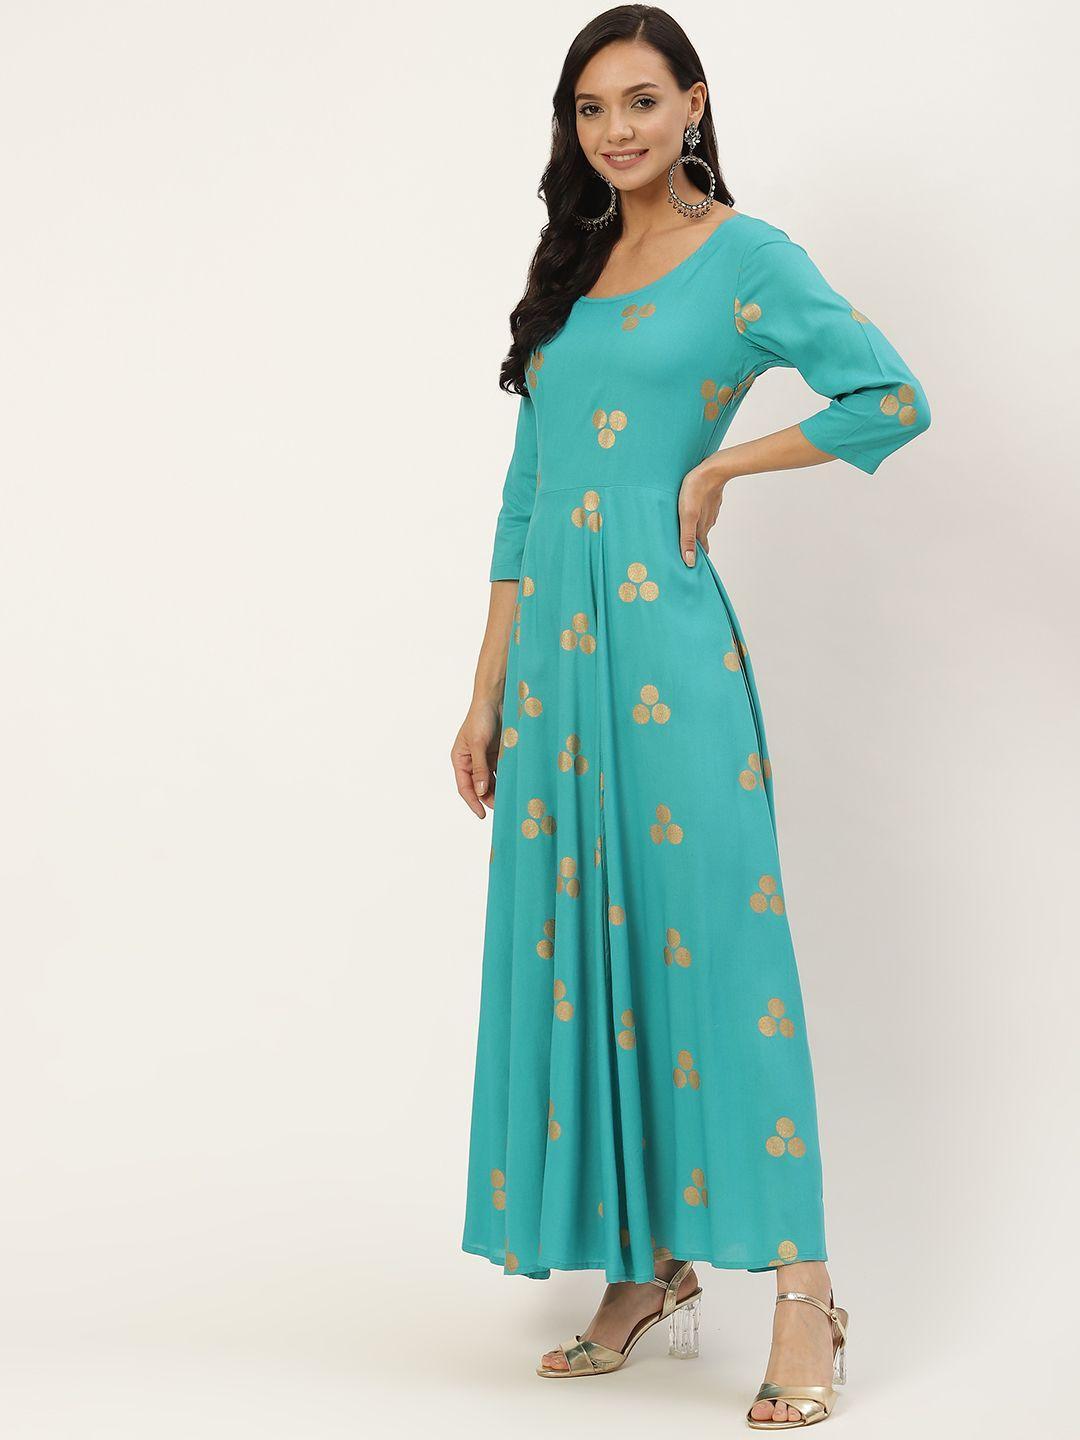 deewa turquoise blue & golden ethnic maxi dress